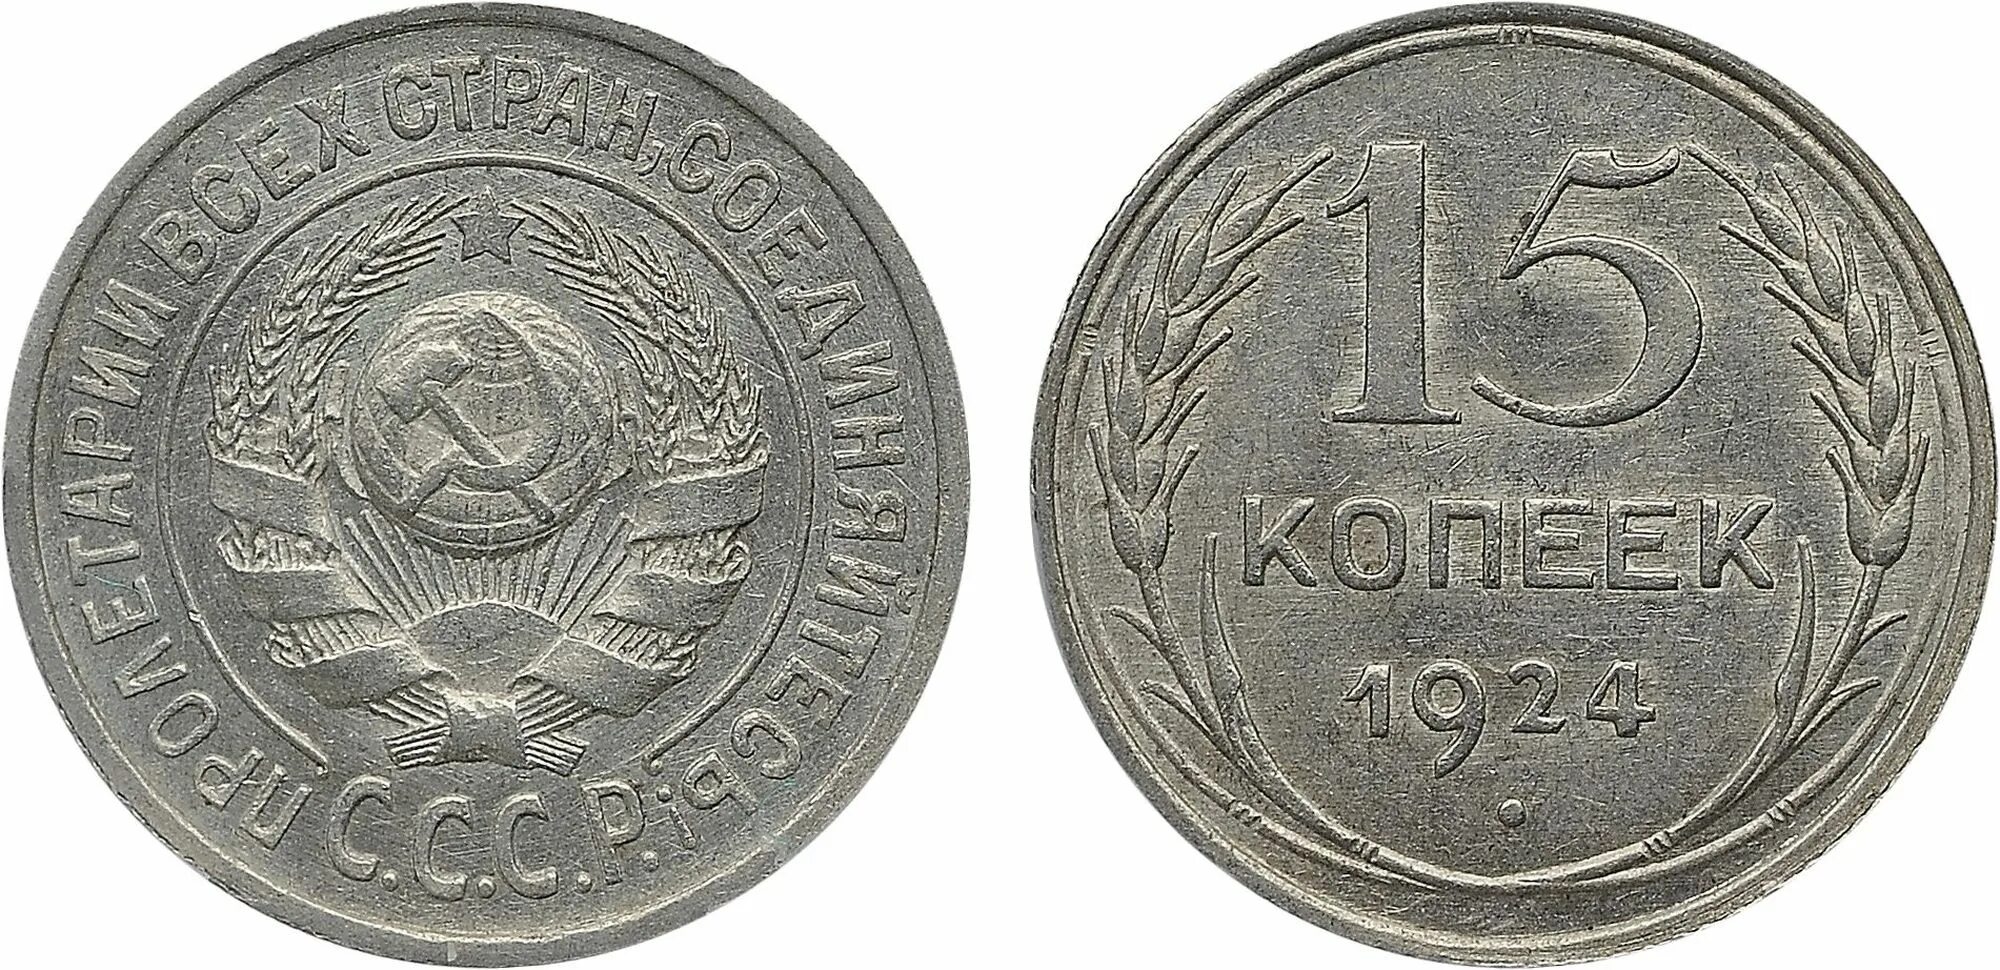 20 копеек 1924 года. 20 Копеек 1925 СССР монеты. Монета 1925 года 20 копеек. 15 Копеек 1924. Монета СССР 20 копеек.